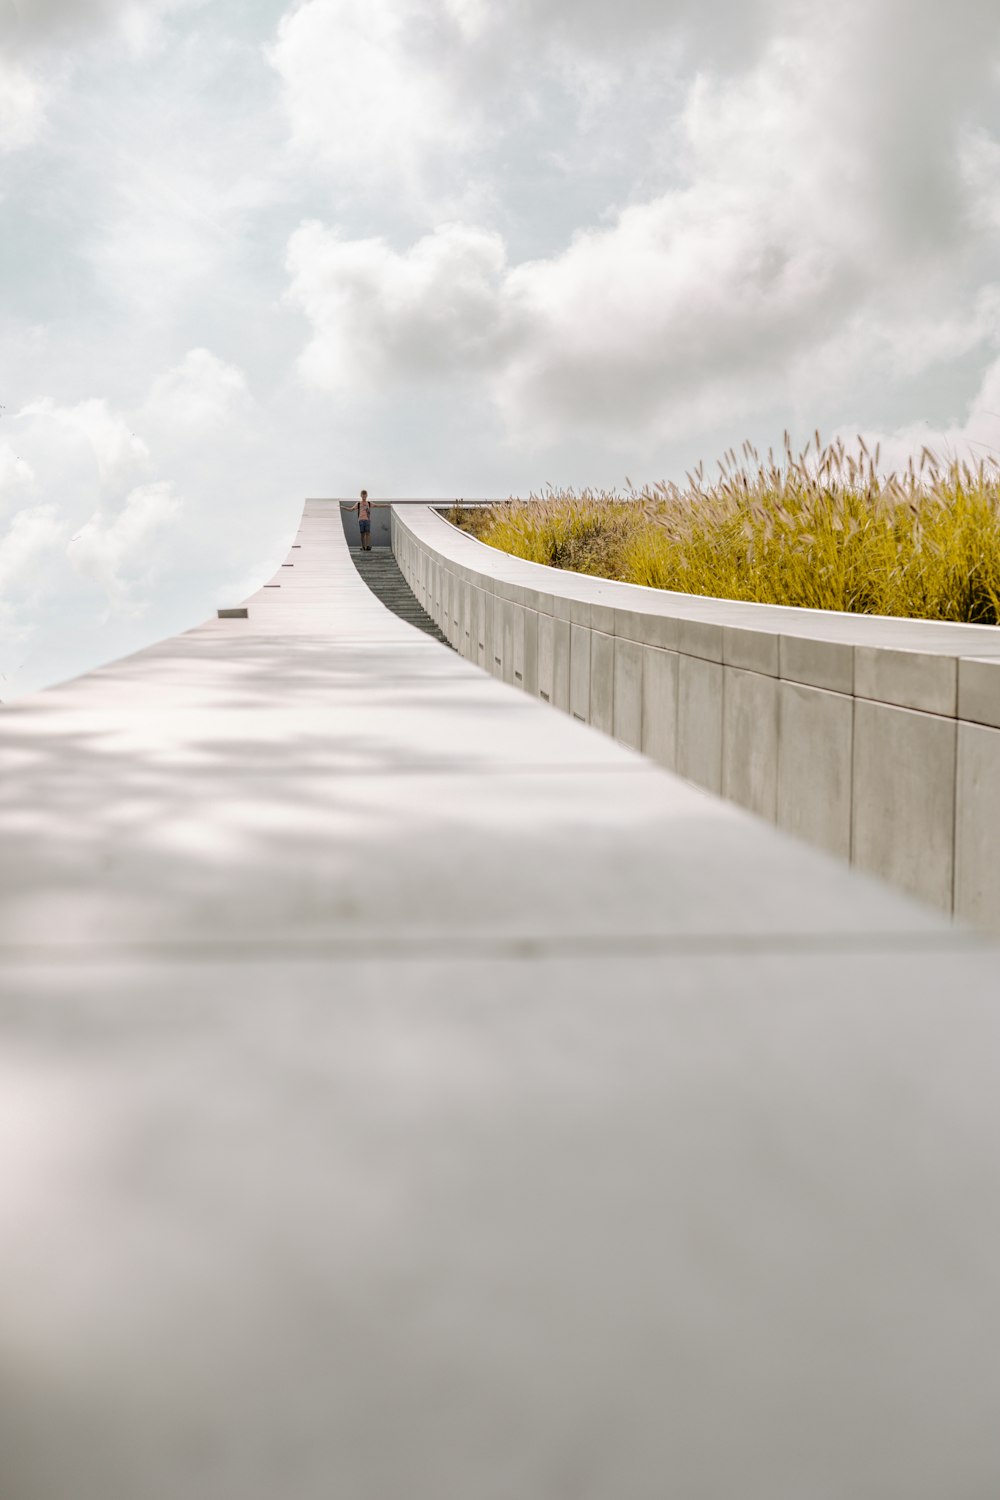 a person riding a skateboard down a concrete walkway